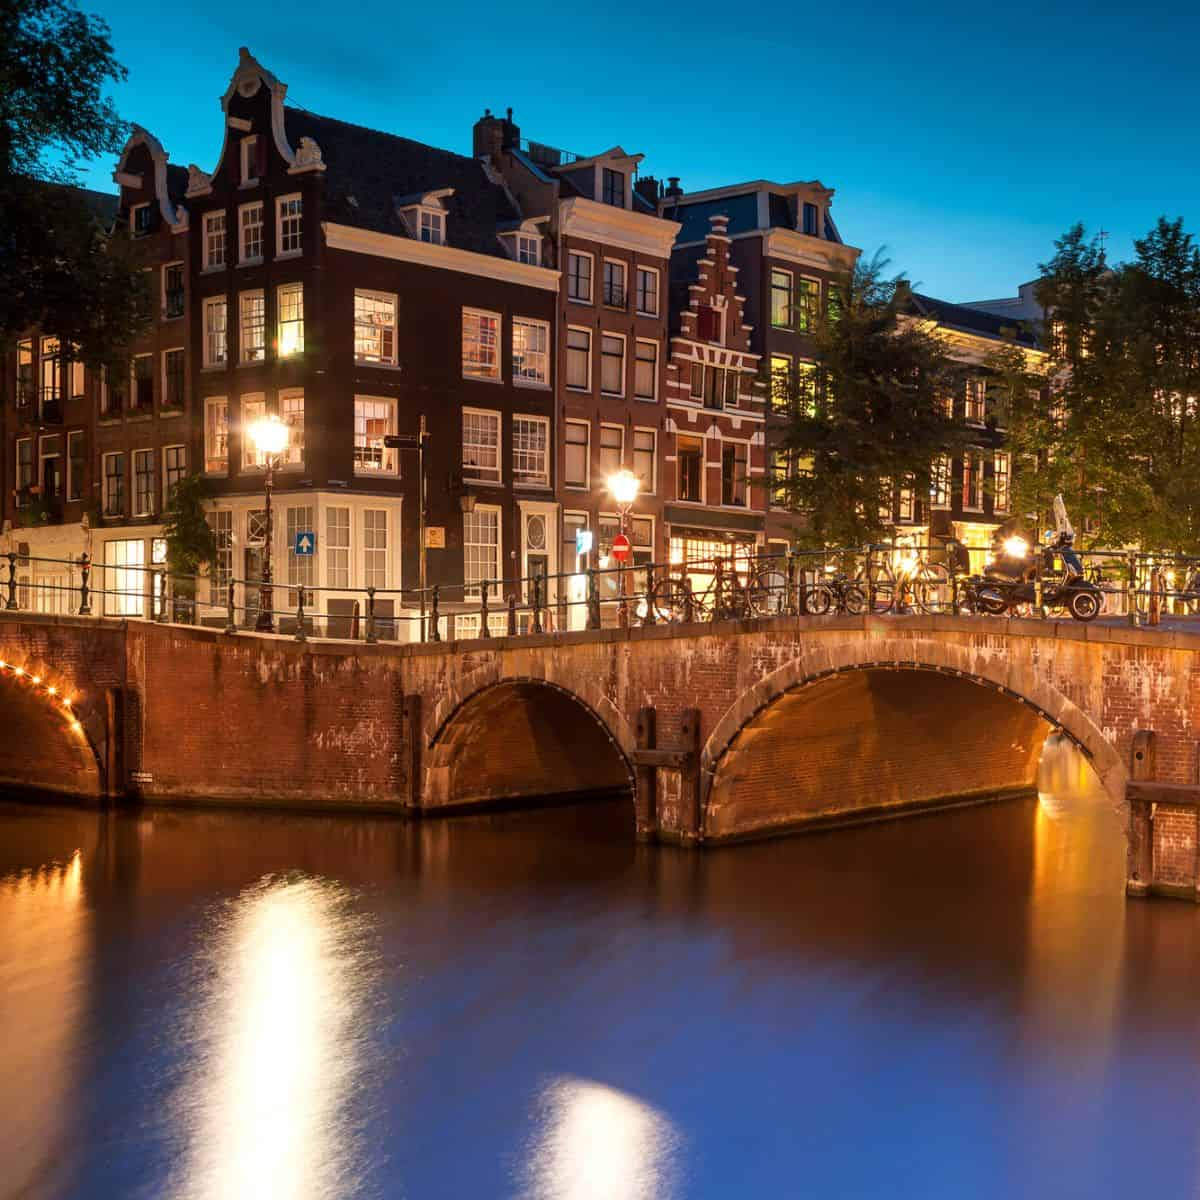 A bridge in Amsterdam at night.